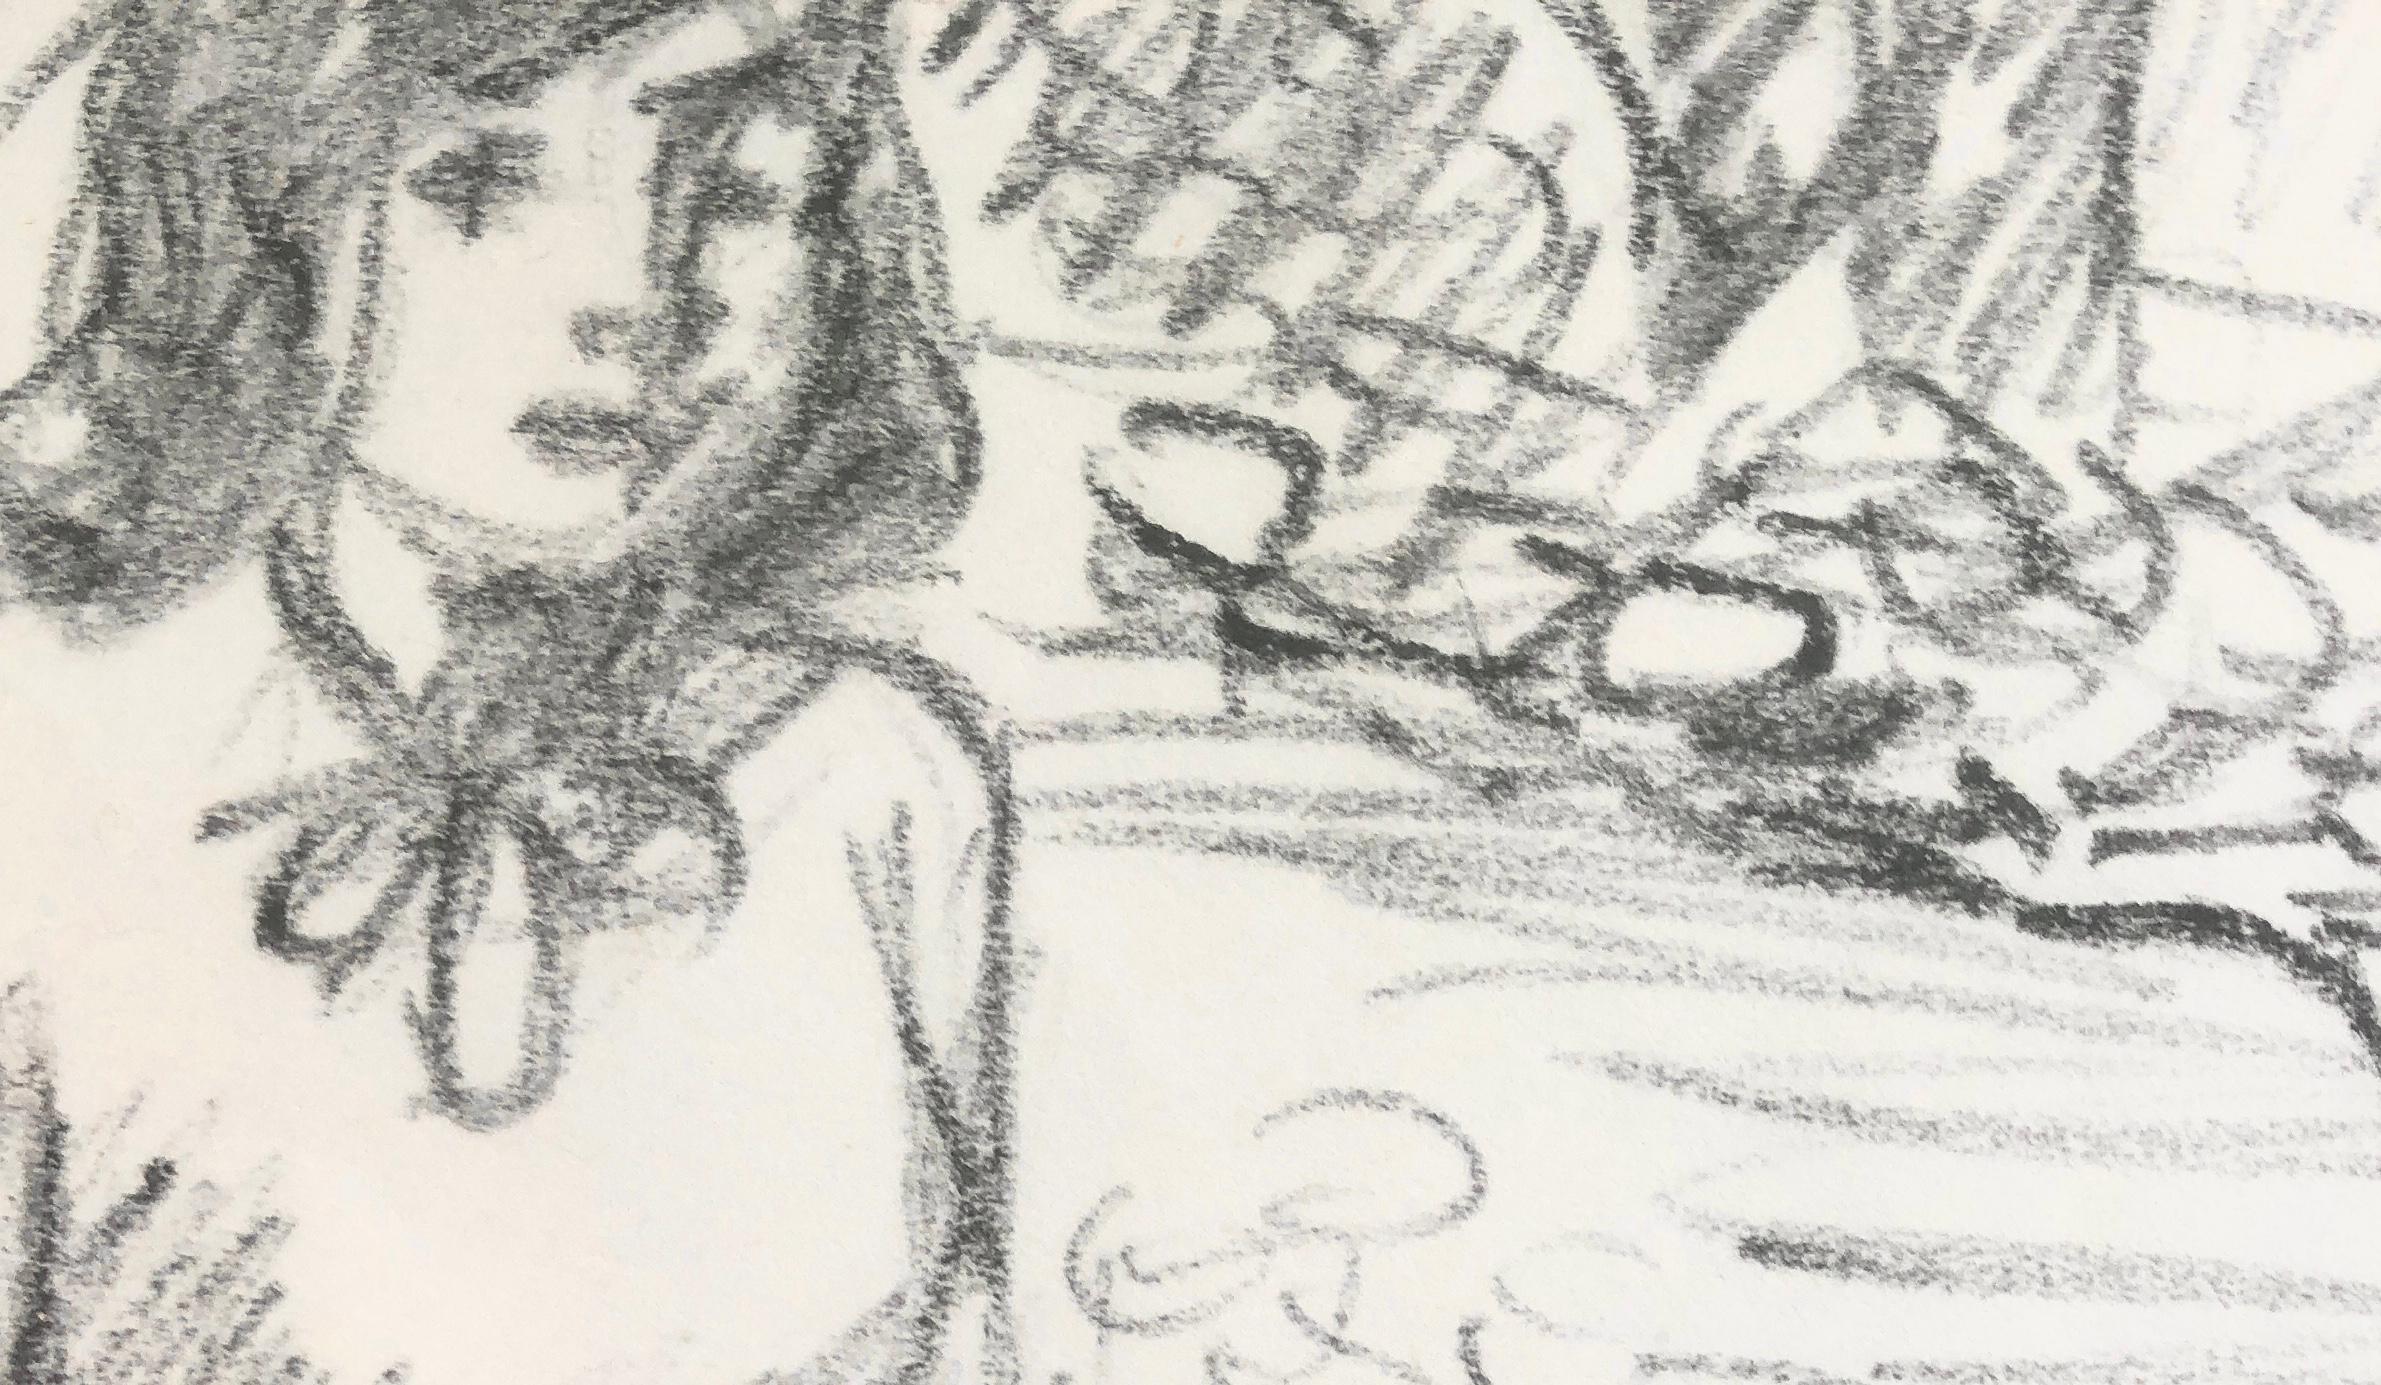 Casimiro Martinez Tarrassó (1900-1979) - Seated Woman - Pencil
Drawing measures 31x21 cm.
Frame measures 47x37 cm.

MARTINEZ TARRASSO, Casimiro – Barcelona 1900 - 1979

Casimiro Martínez Tarrasó, known as TARRASSO, trained at the La Lonja school in